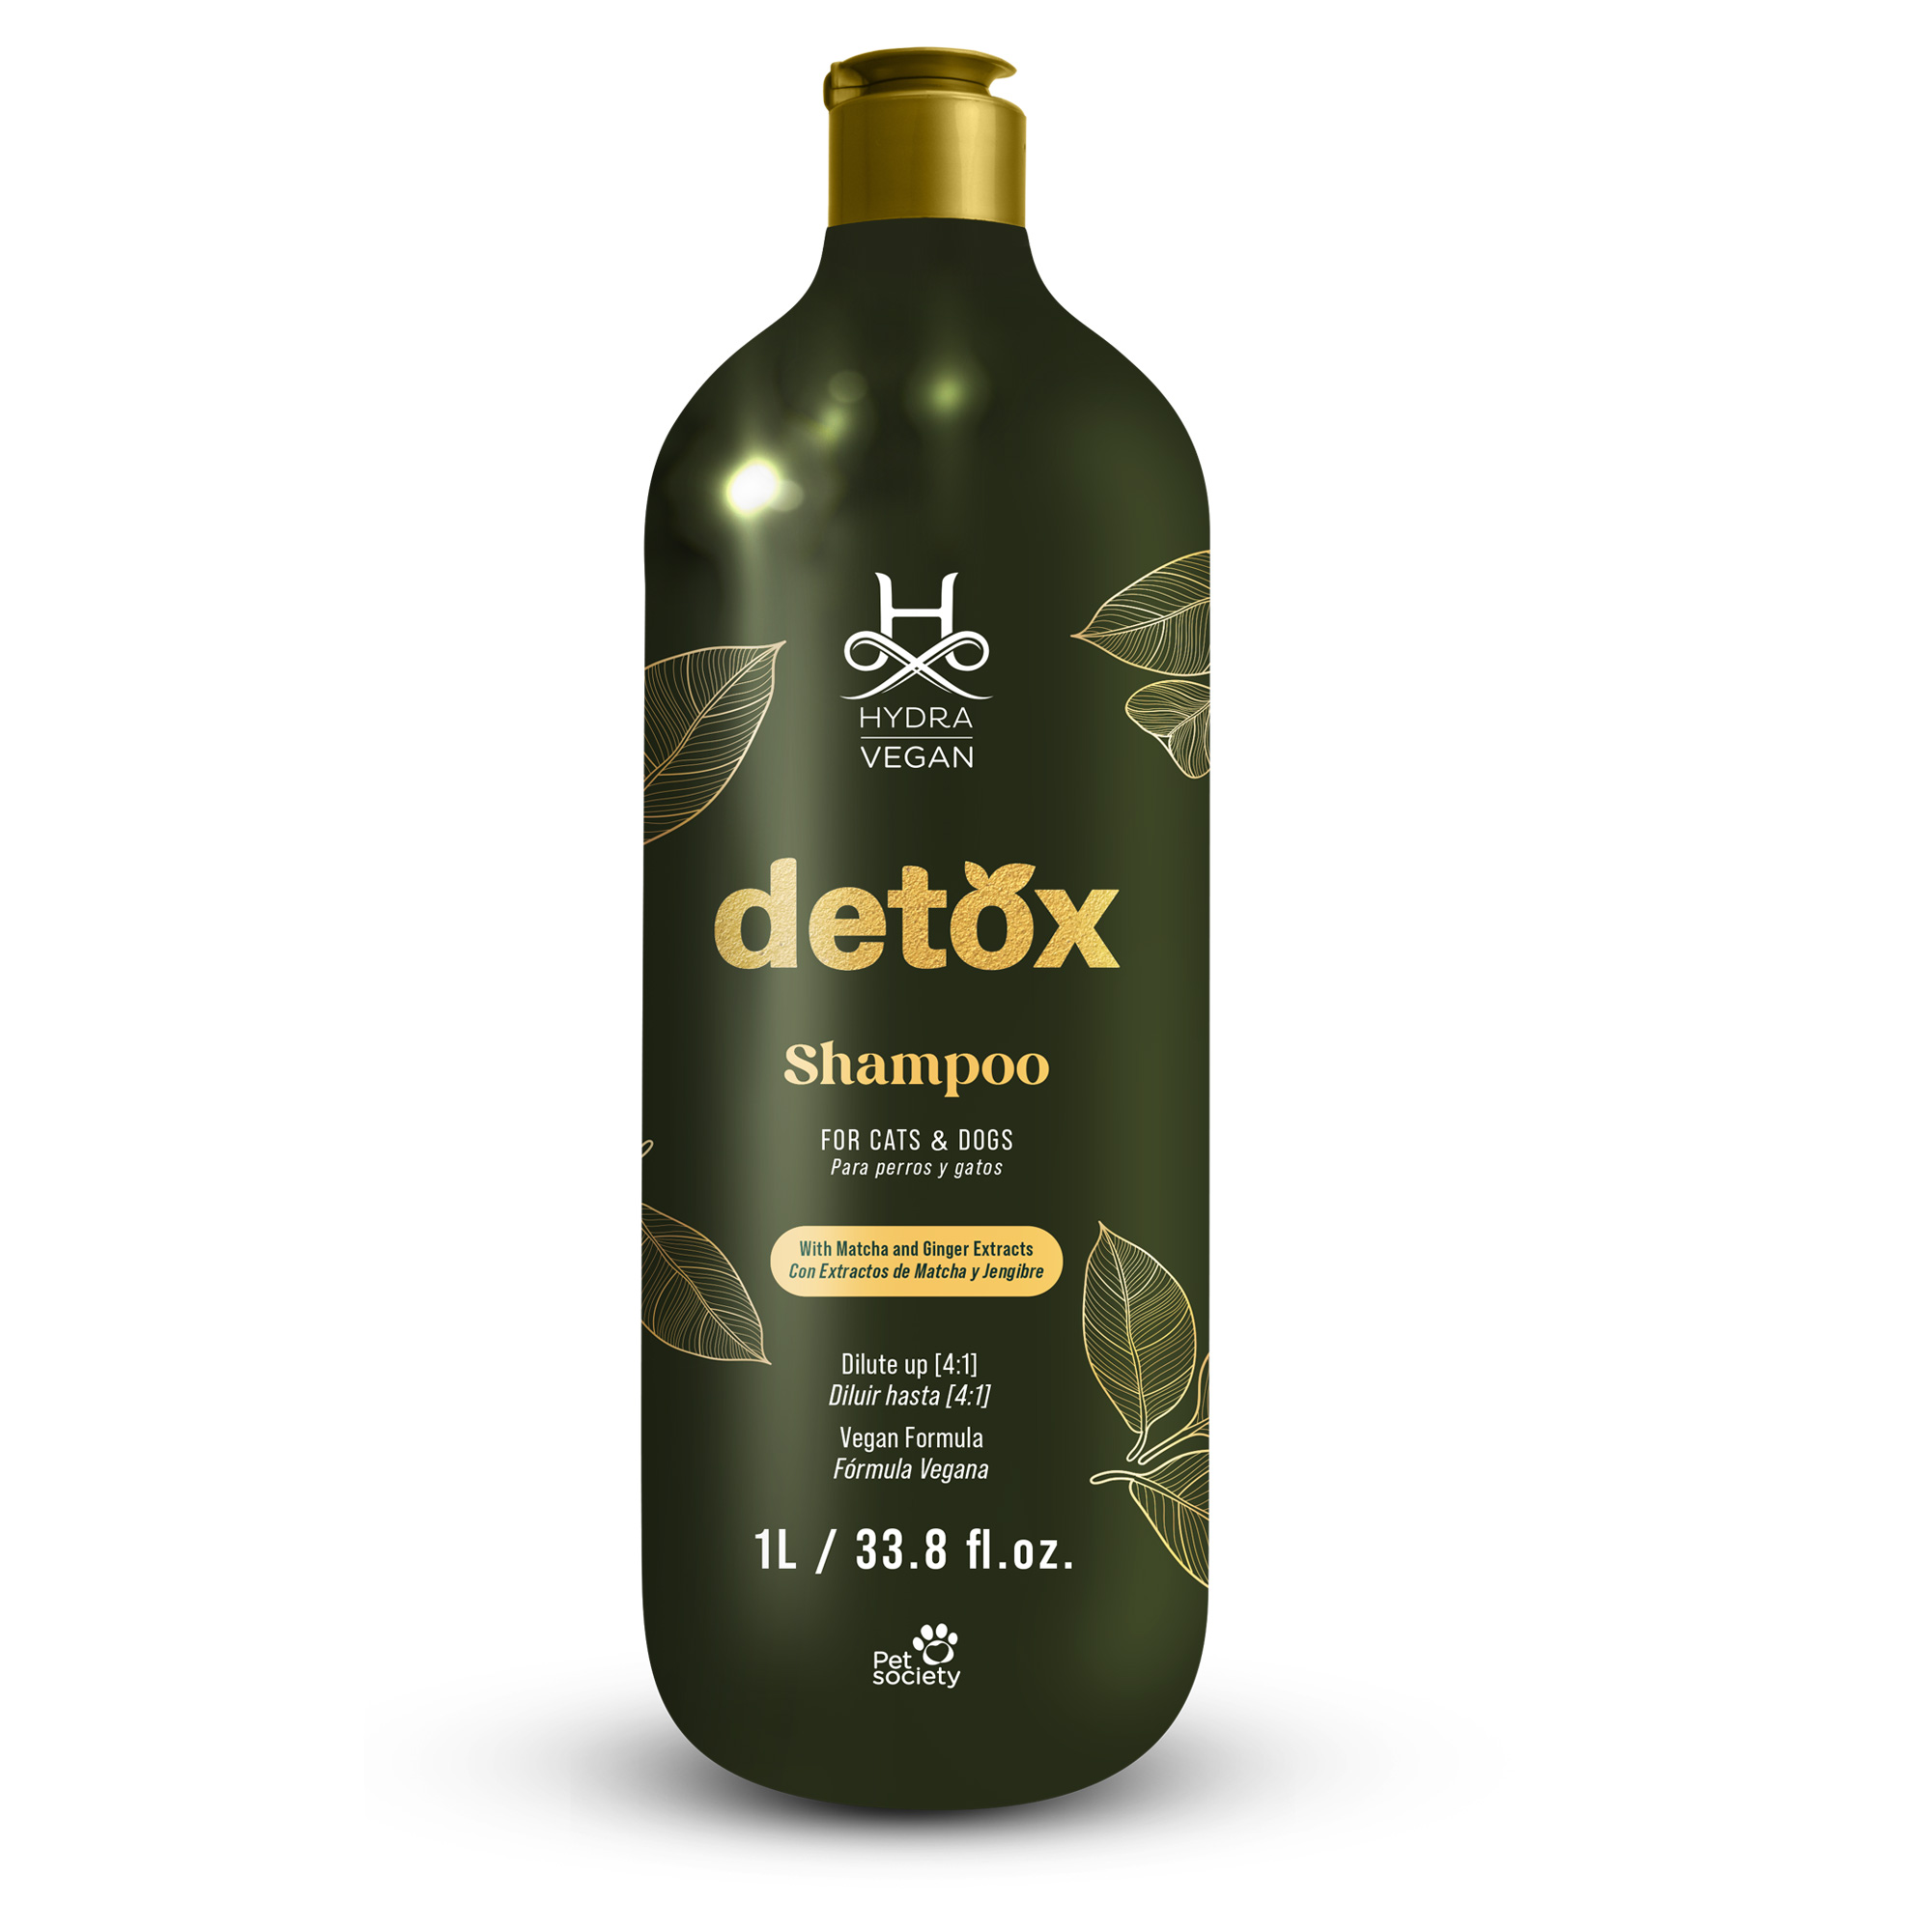 hydra vegan detox shampoo 33oz